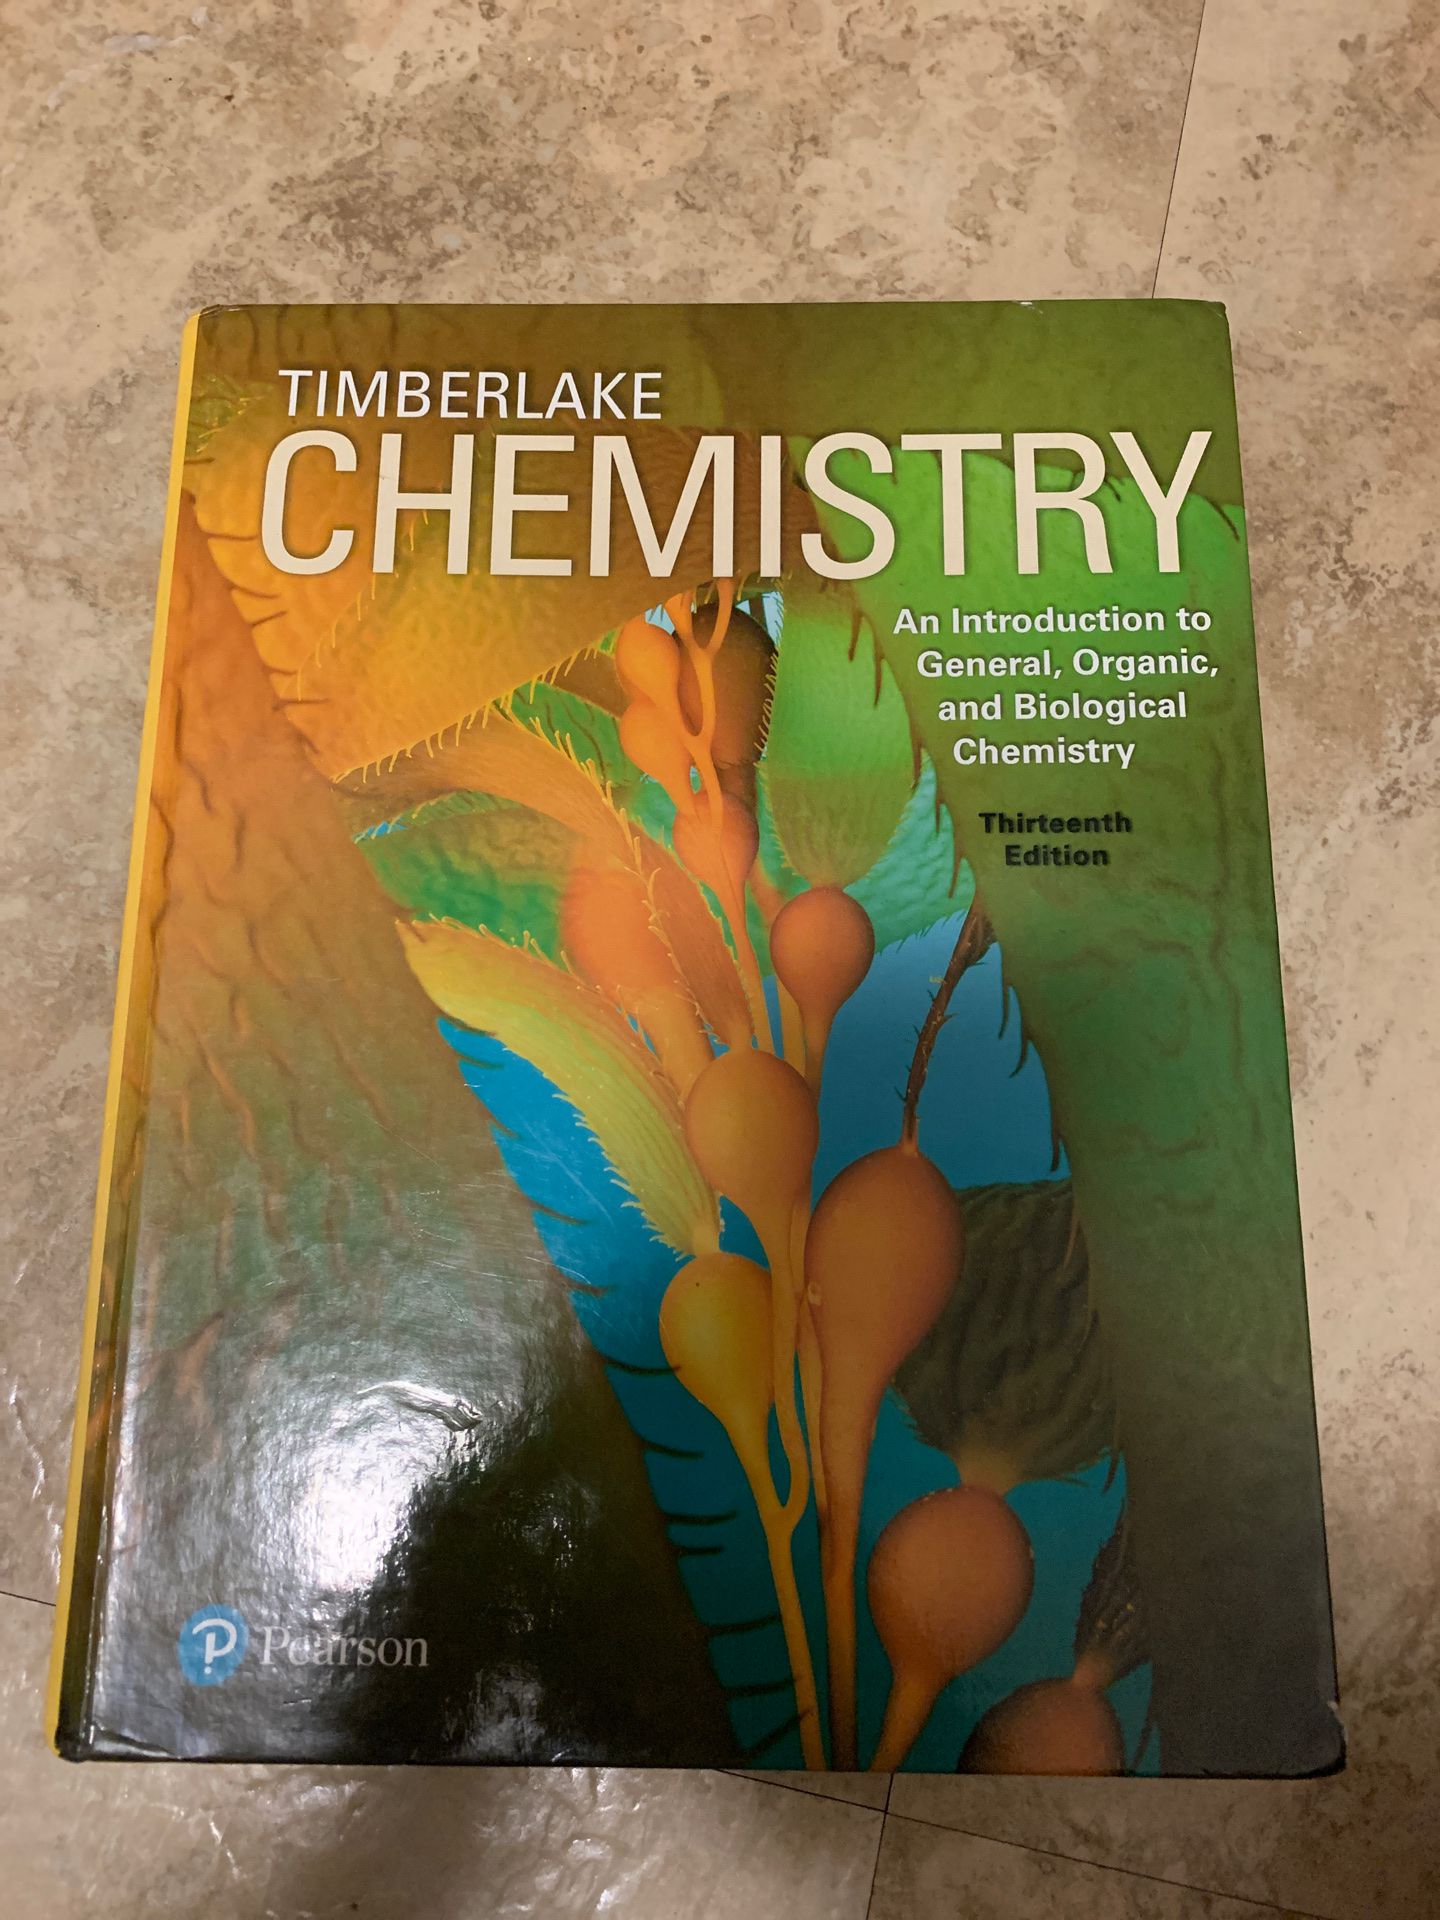 Timberlake Chemistry Textbook